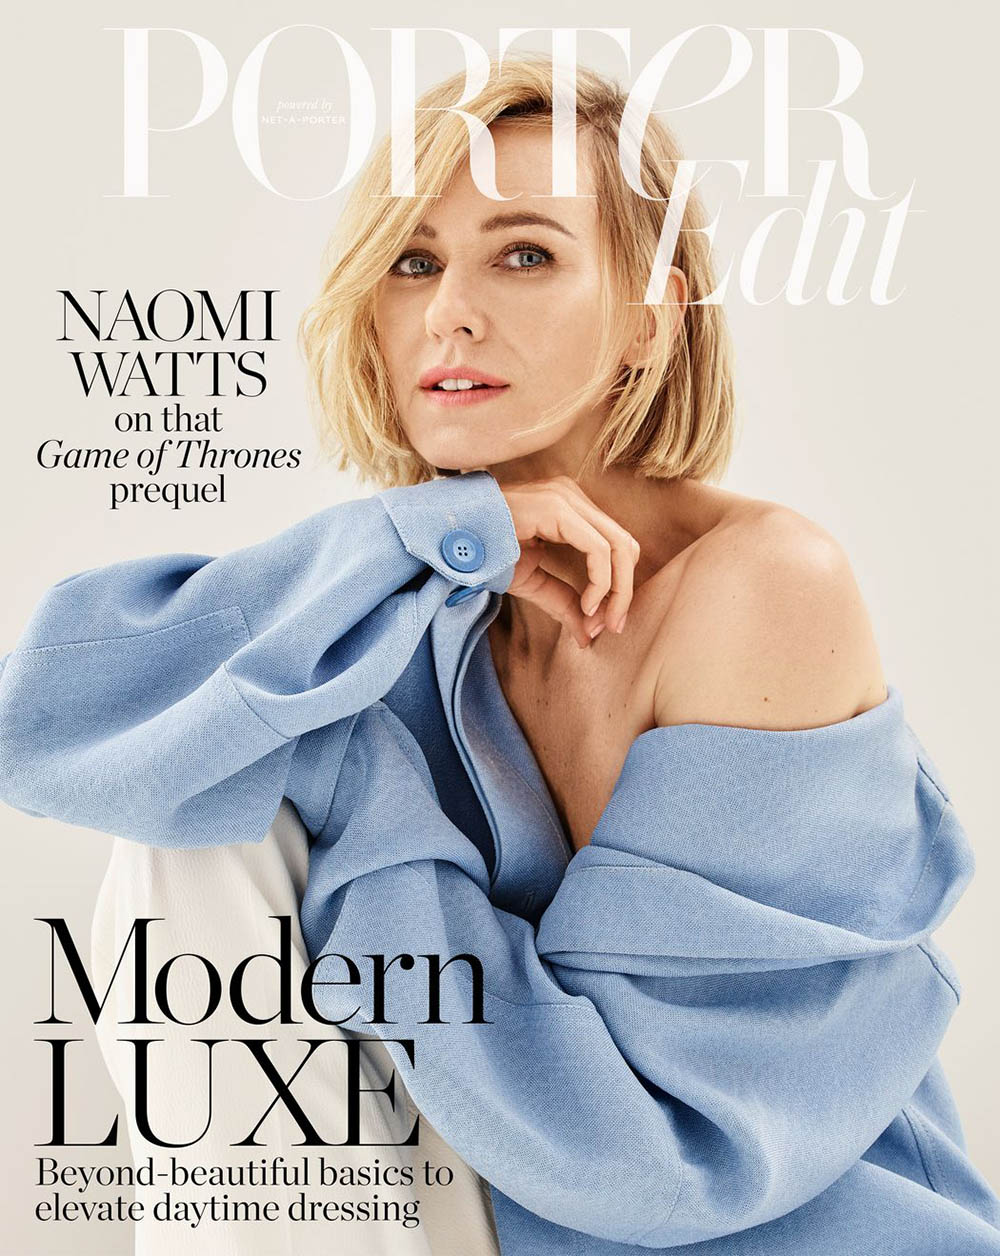 Naomi Watts covers Porter Edit August 2nd, 2019 by Jason Kibbler